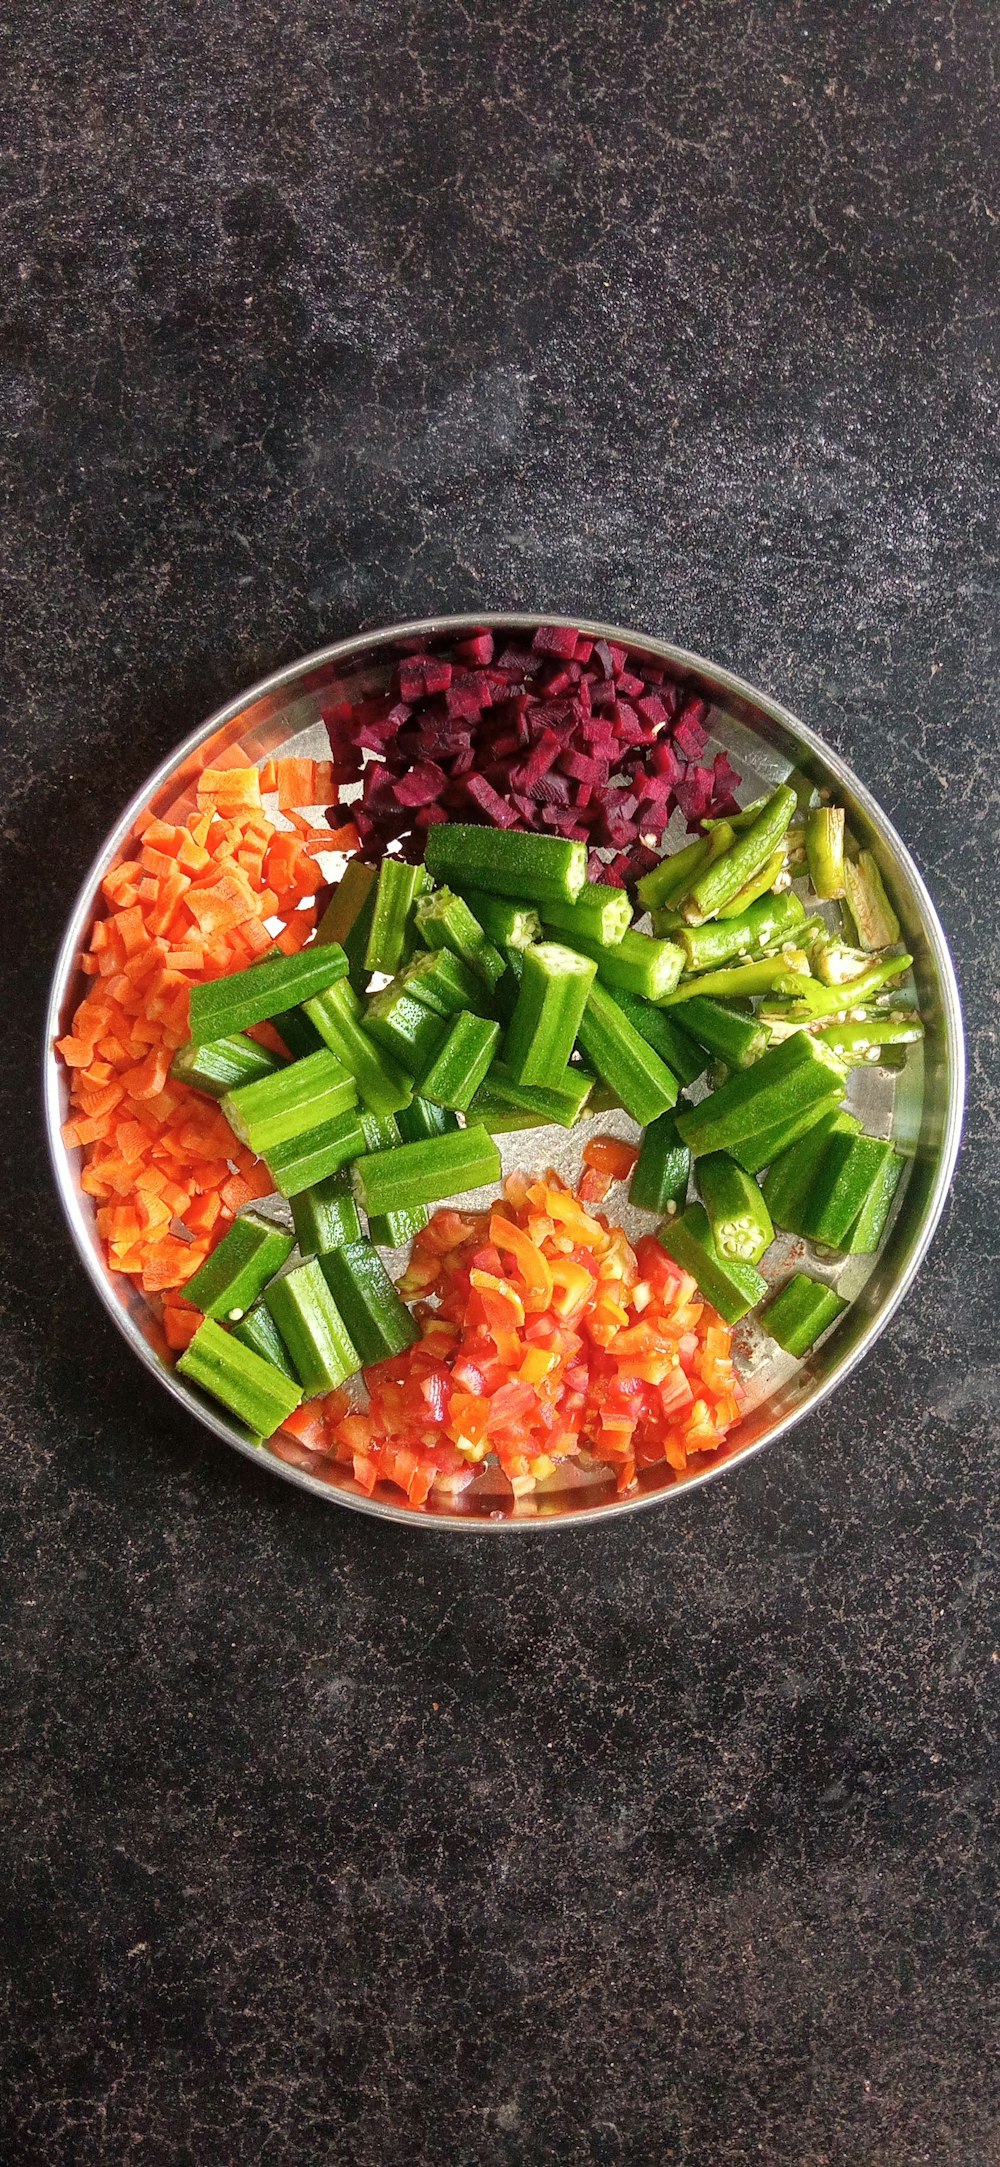 légumes tranchés dans un bol en acier inoxydable